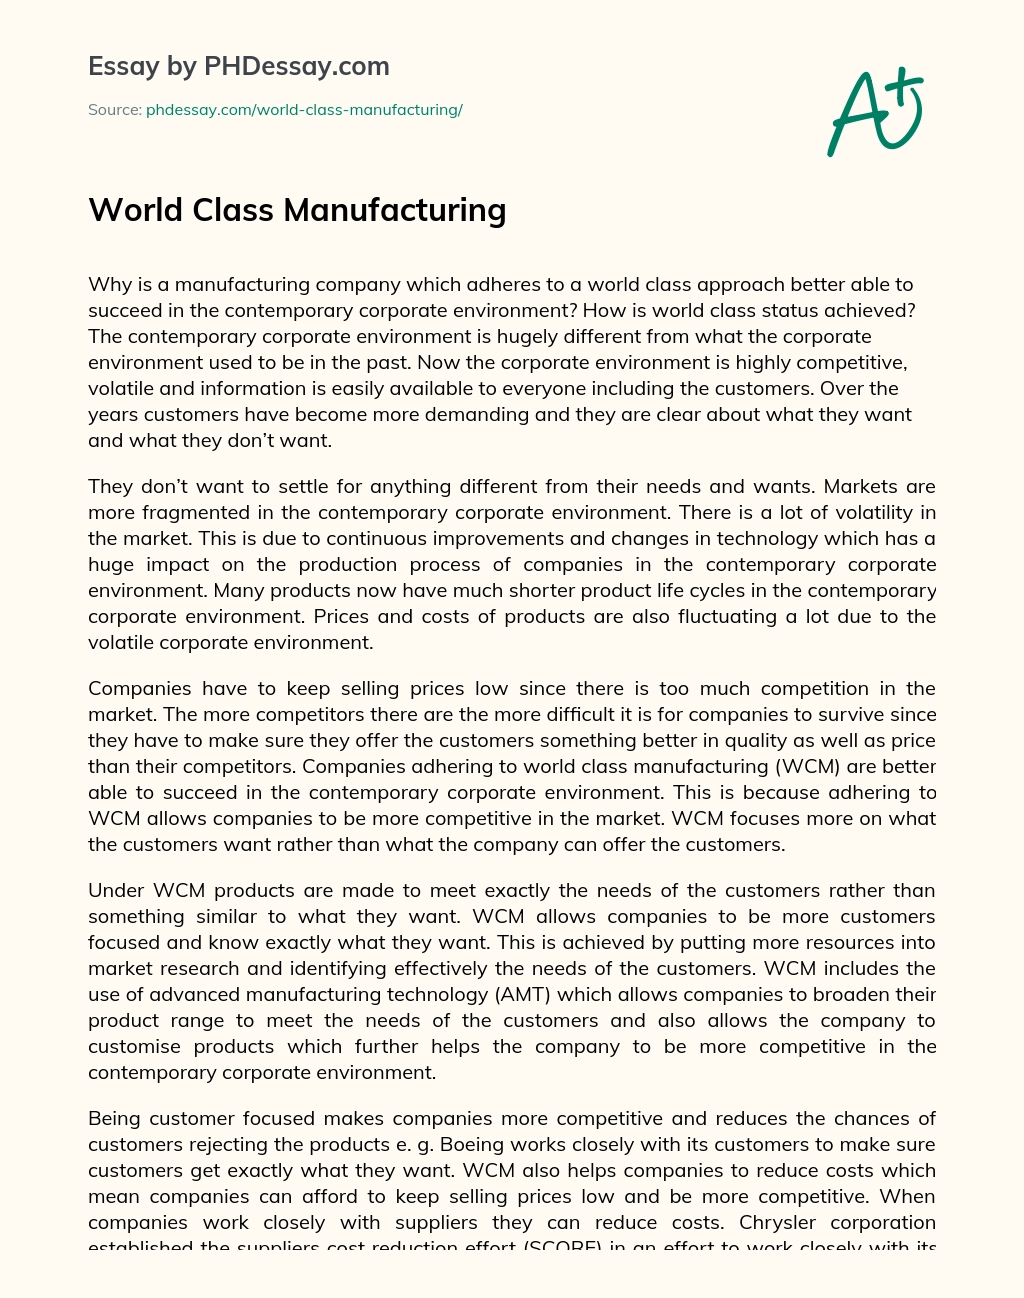 World Class Manufacturing essay